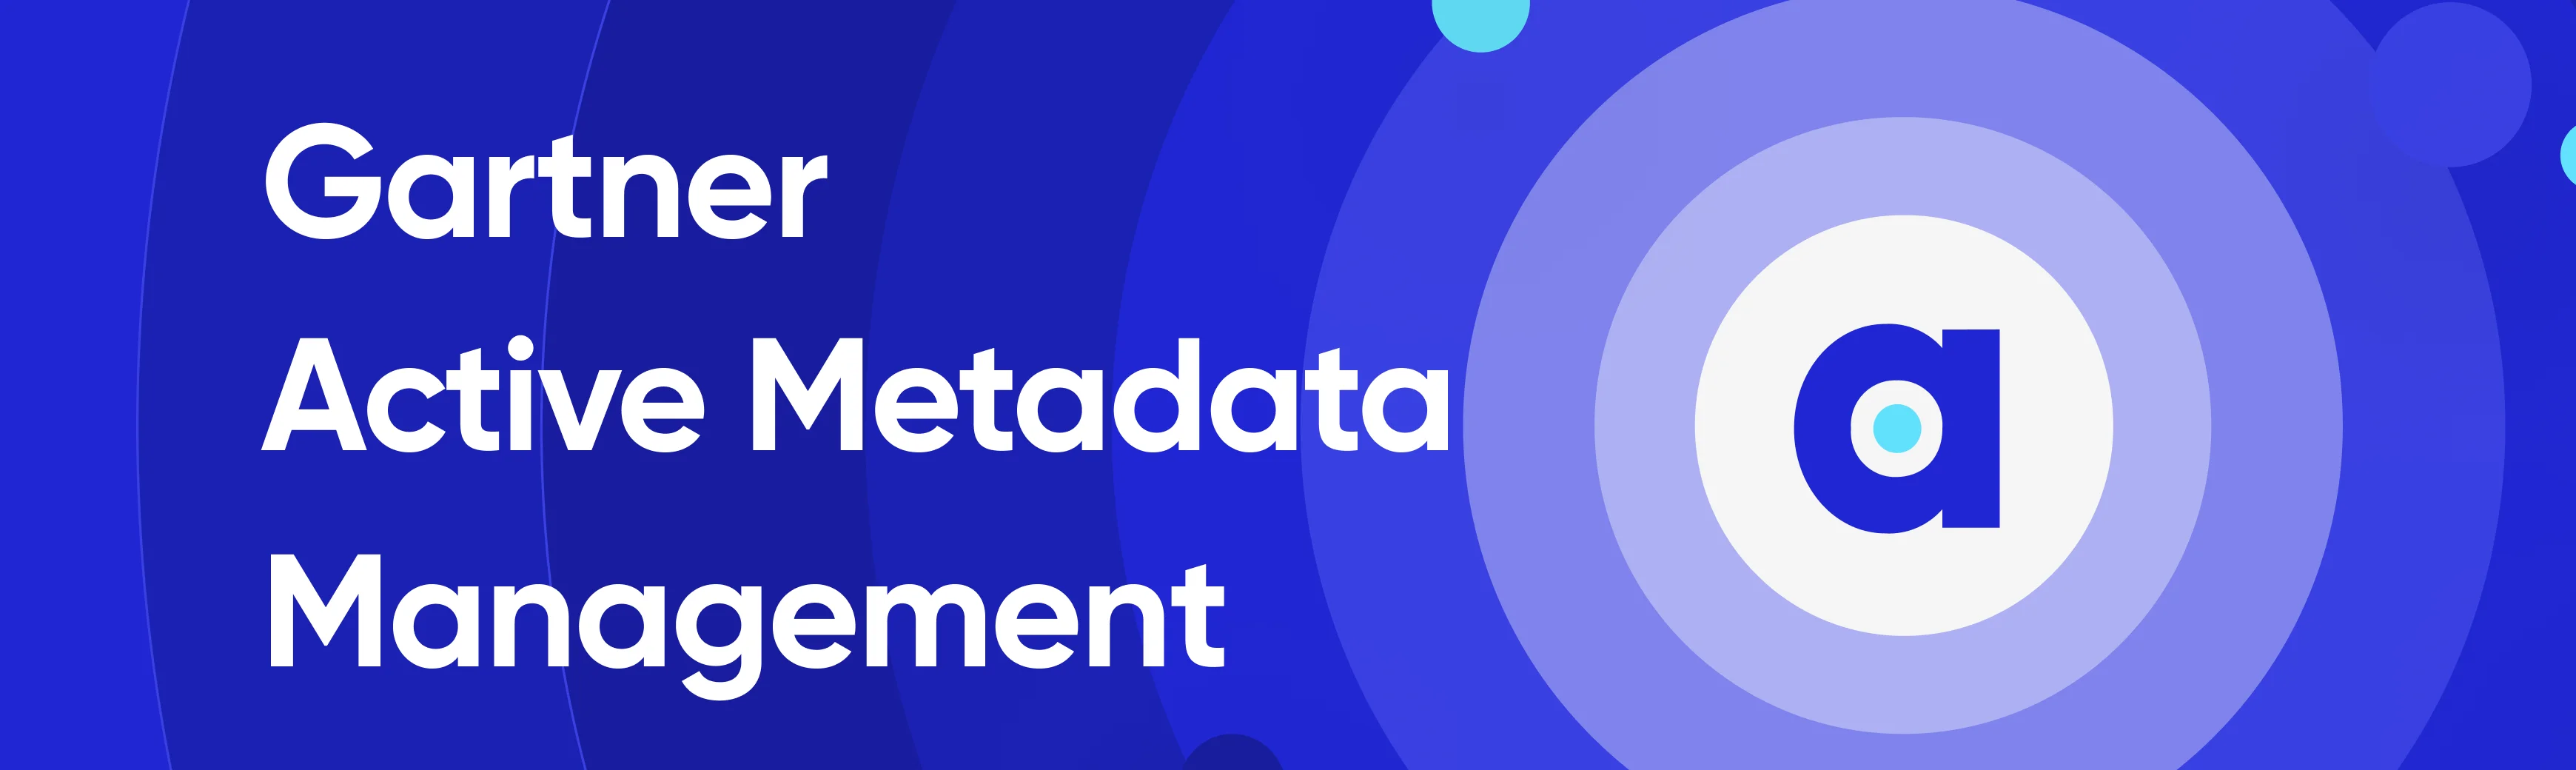 Gartner Active Metadata Management